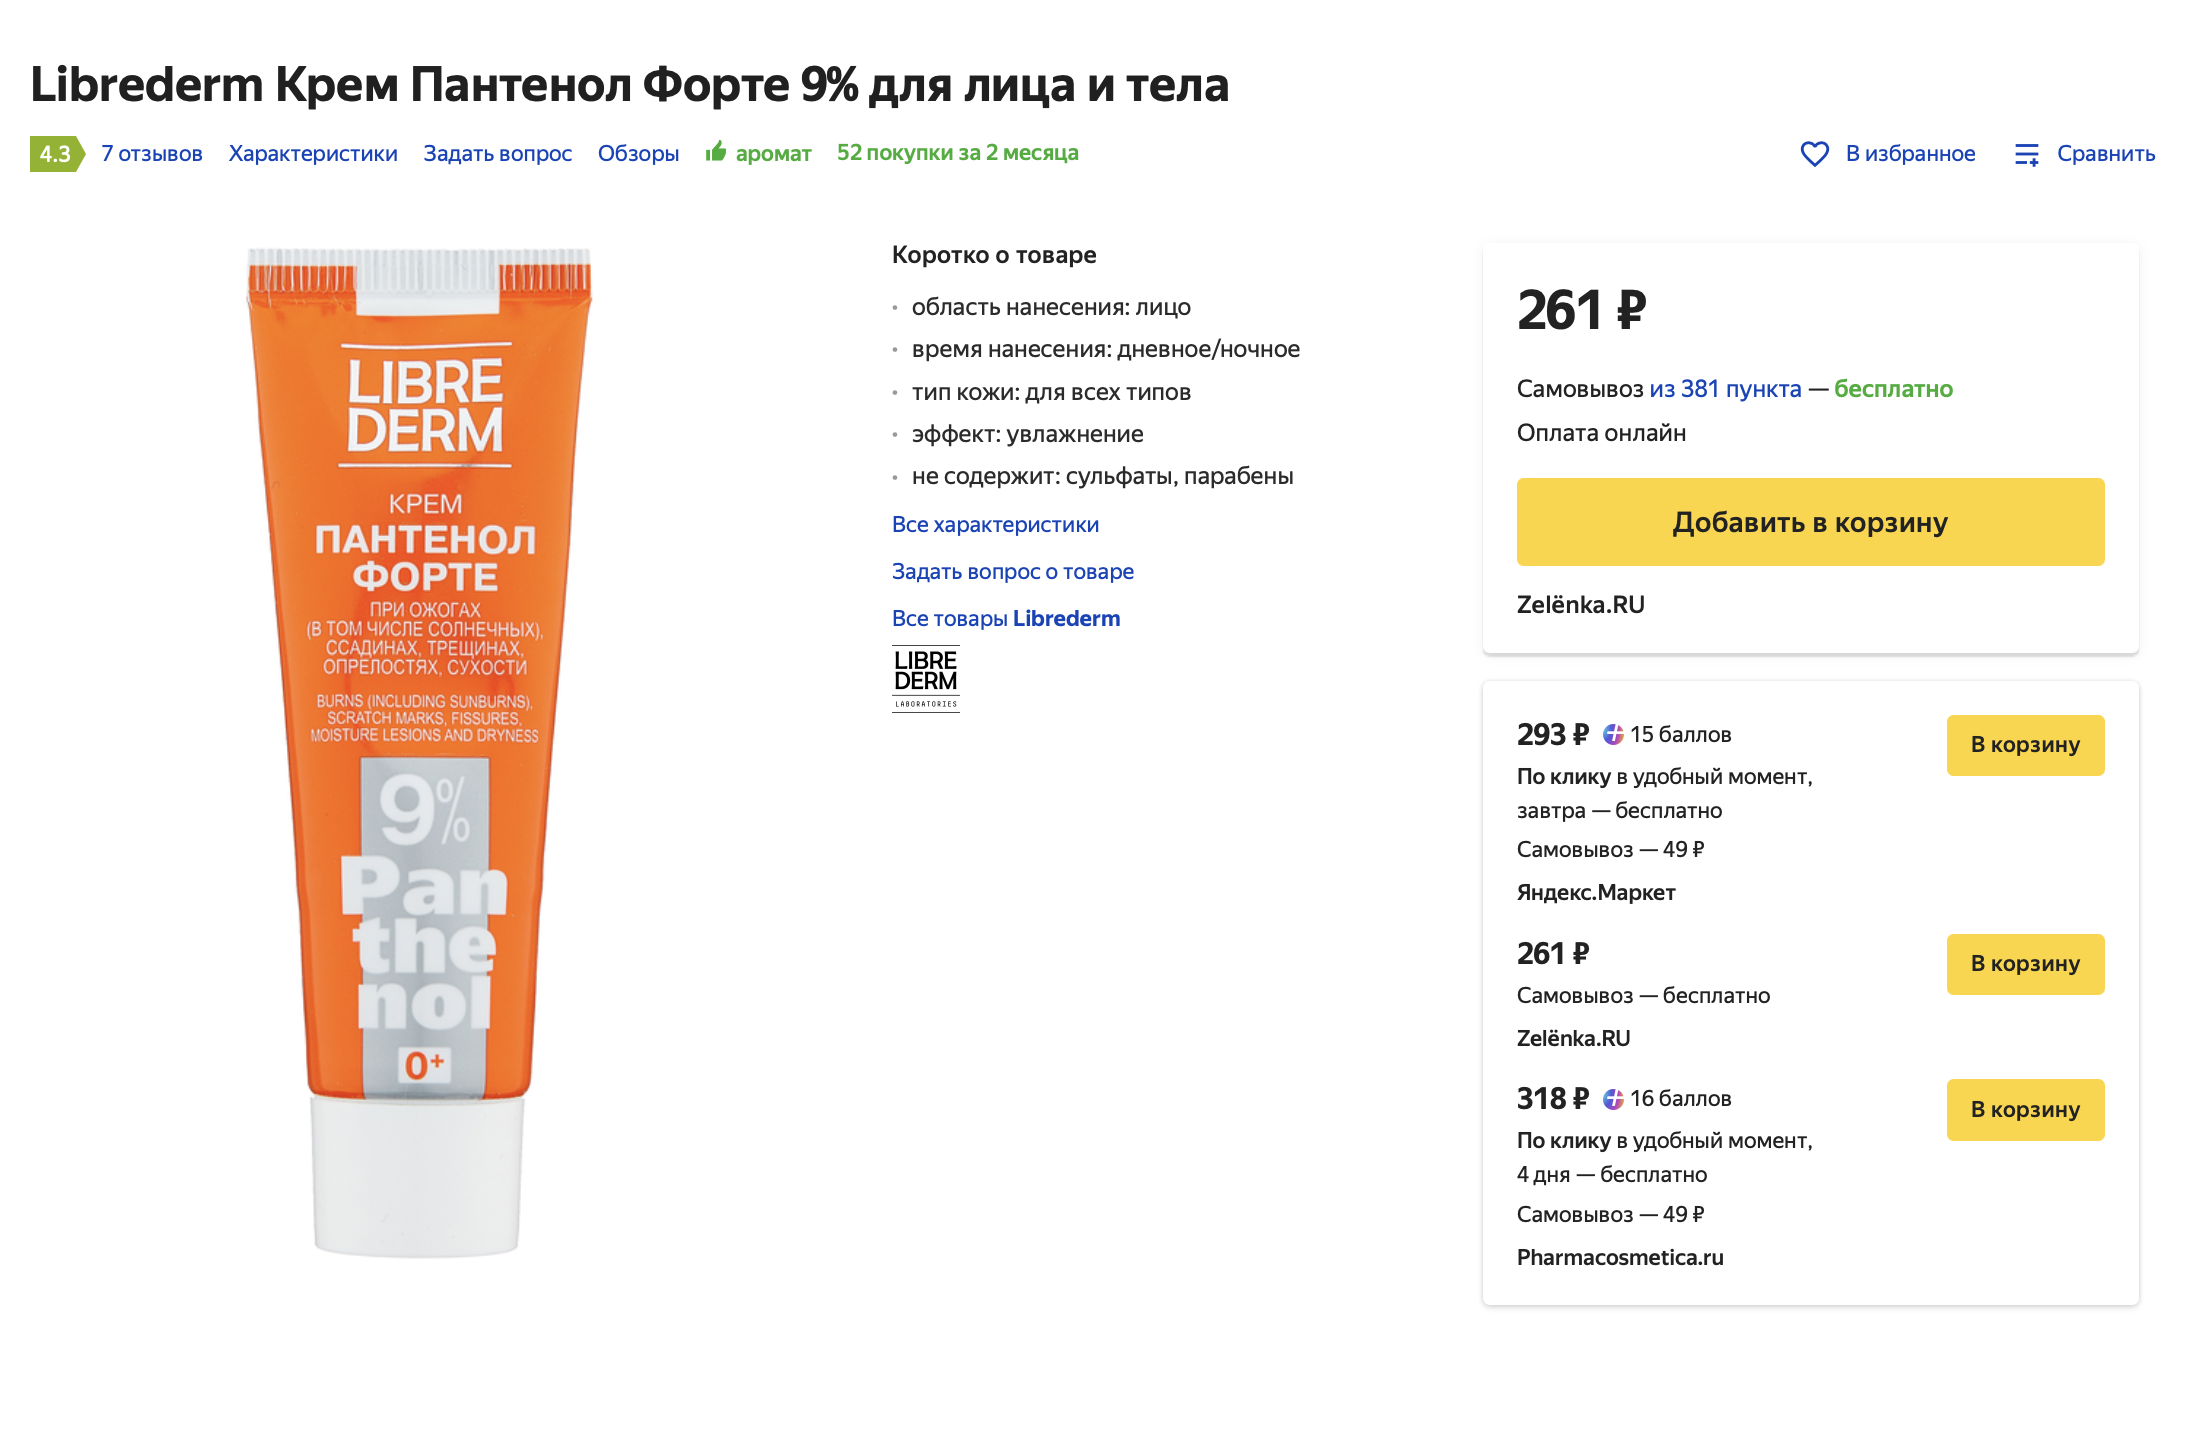 Крем «Либридерм пантенол форте» на «Яндекс-маркете» стоит 261 ₽